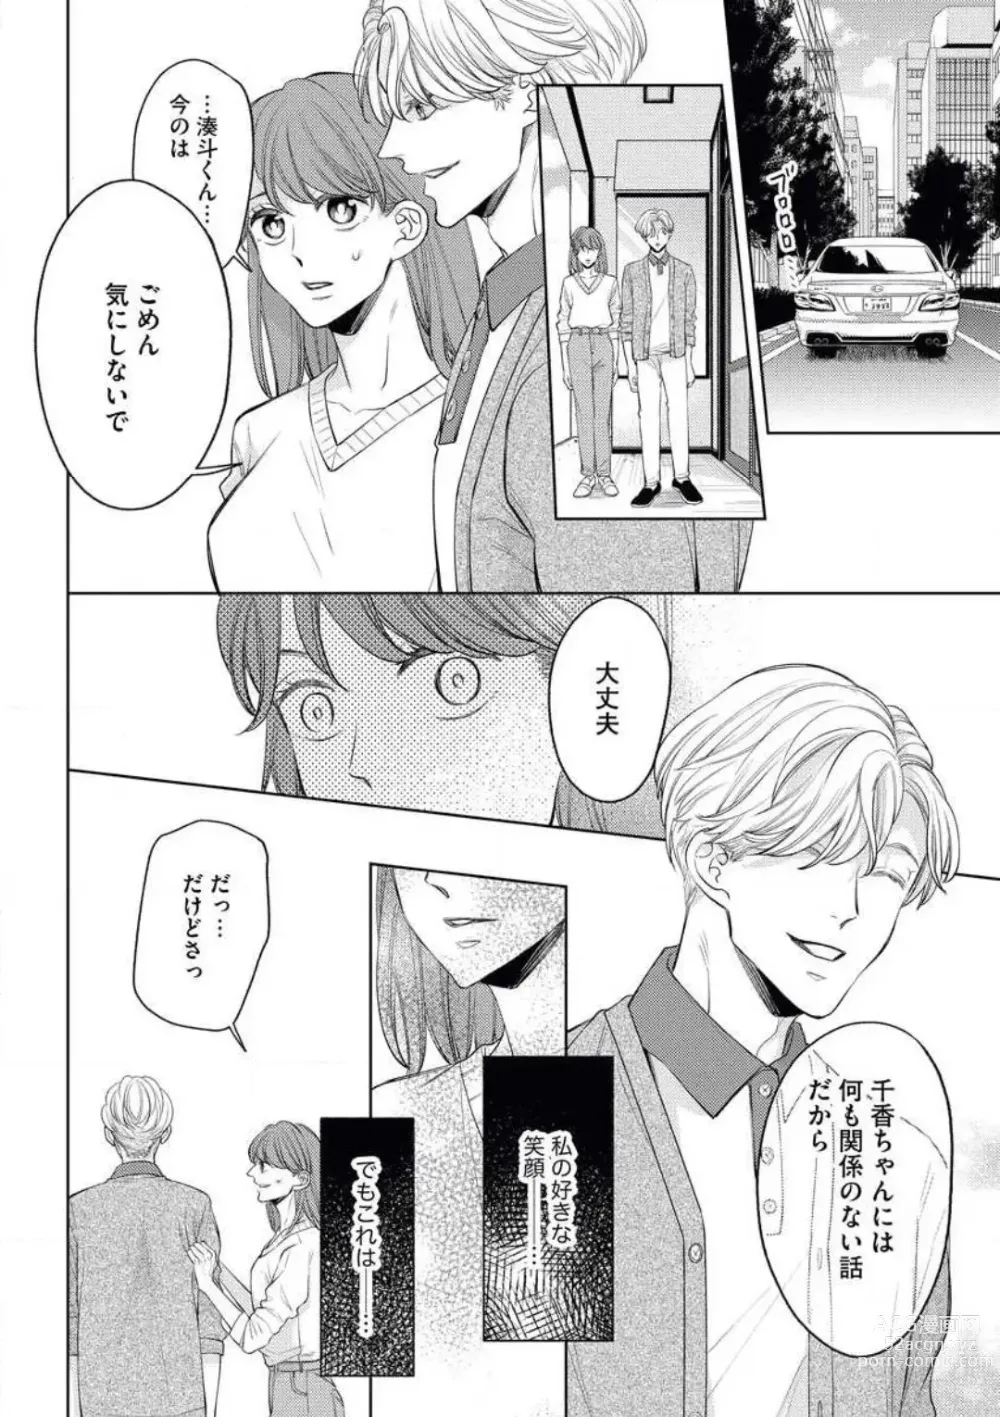 Page 15 of manga Sepia-iro no Koi ga Irozuku Toki